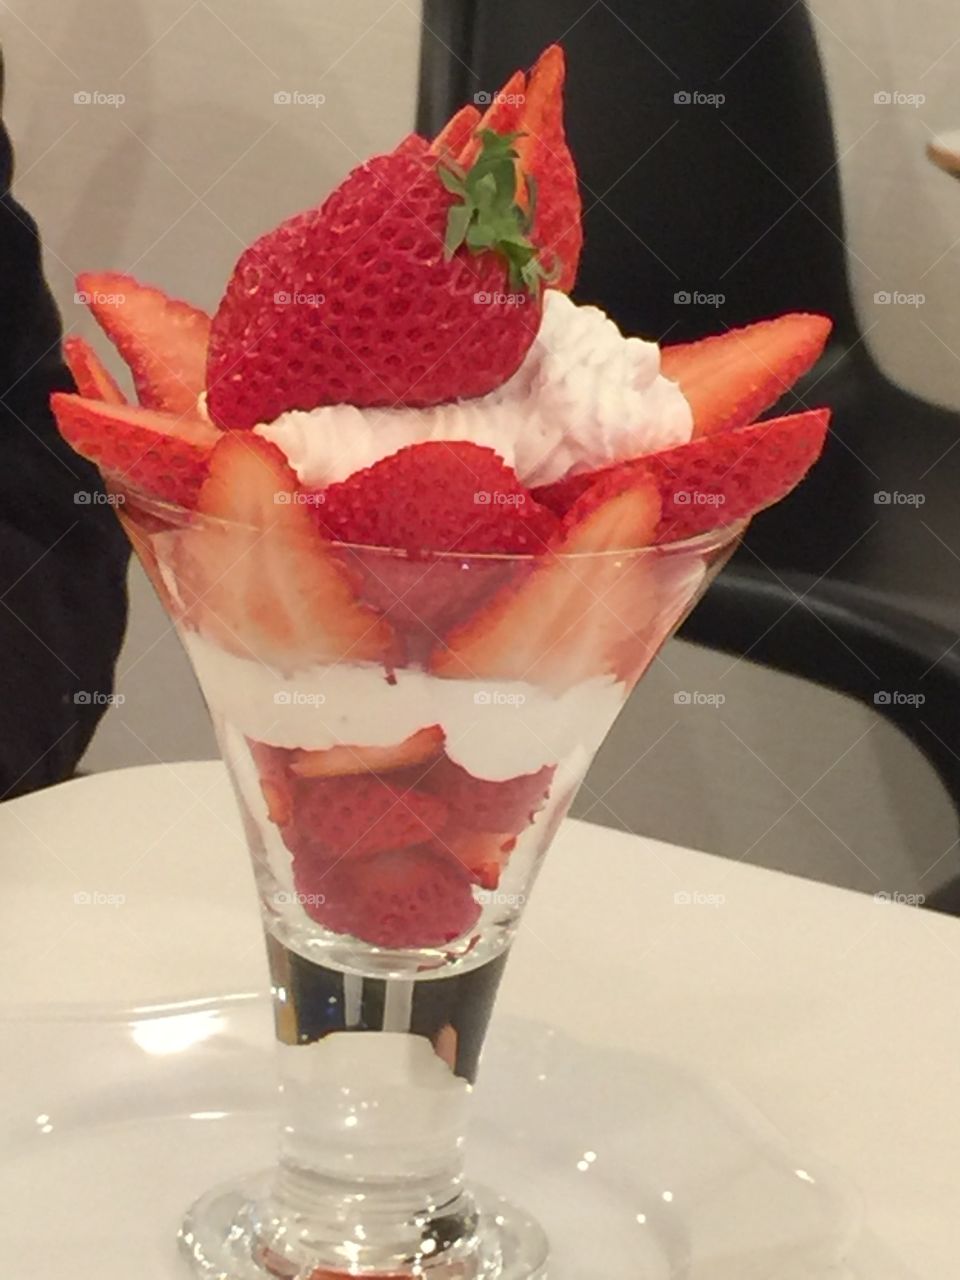 strawberry parfait